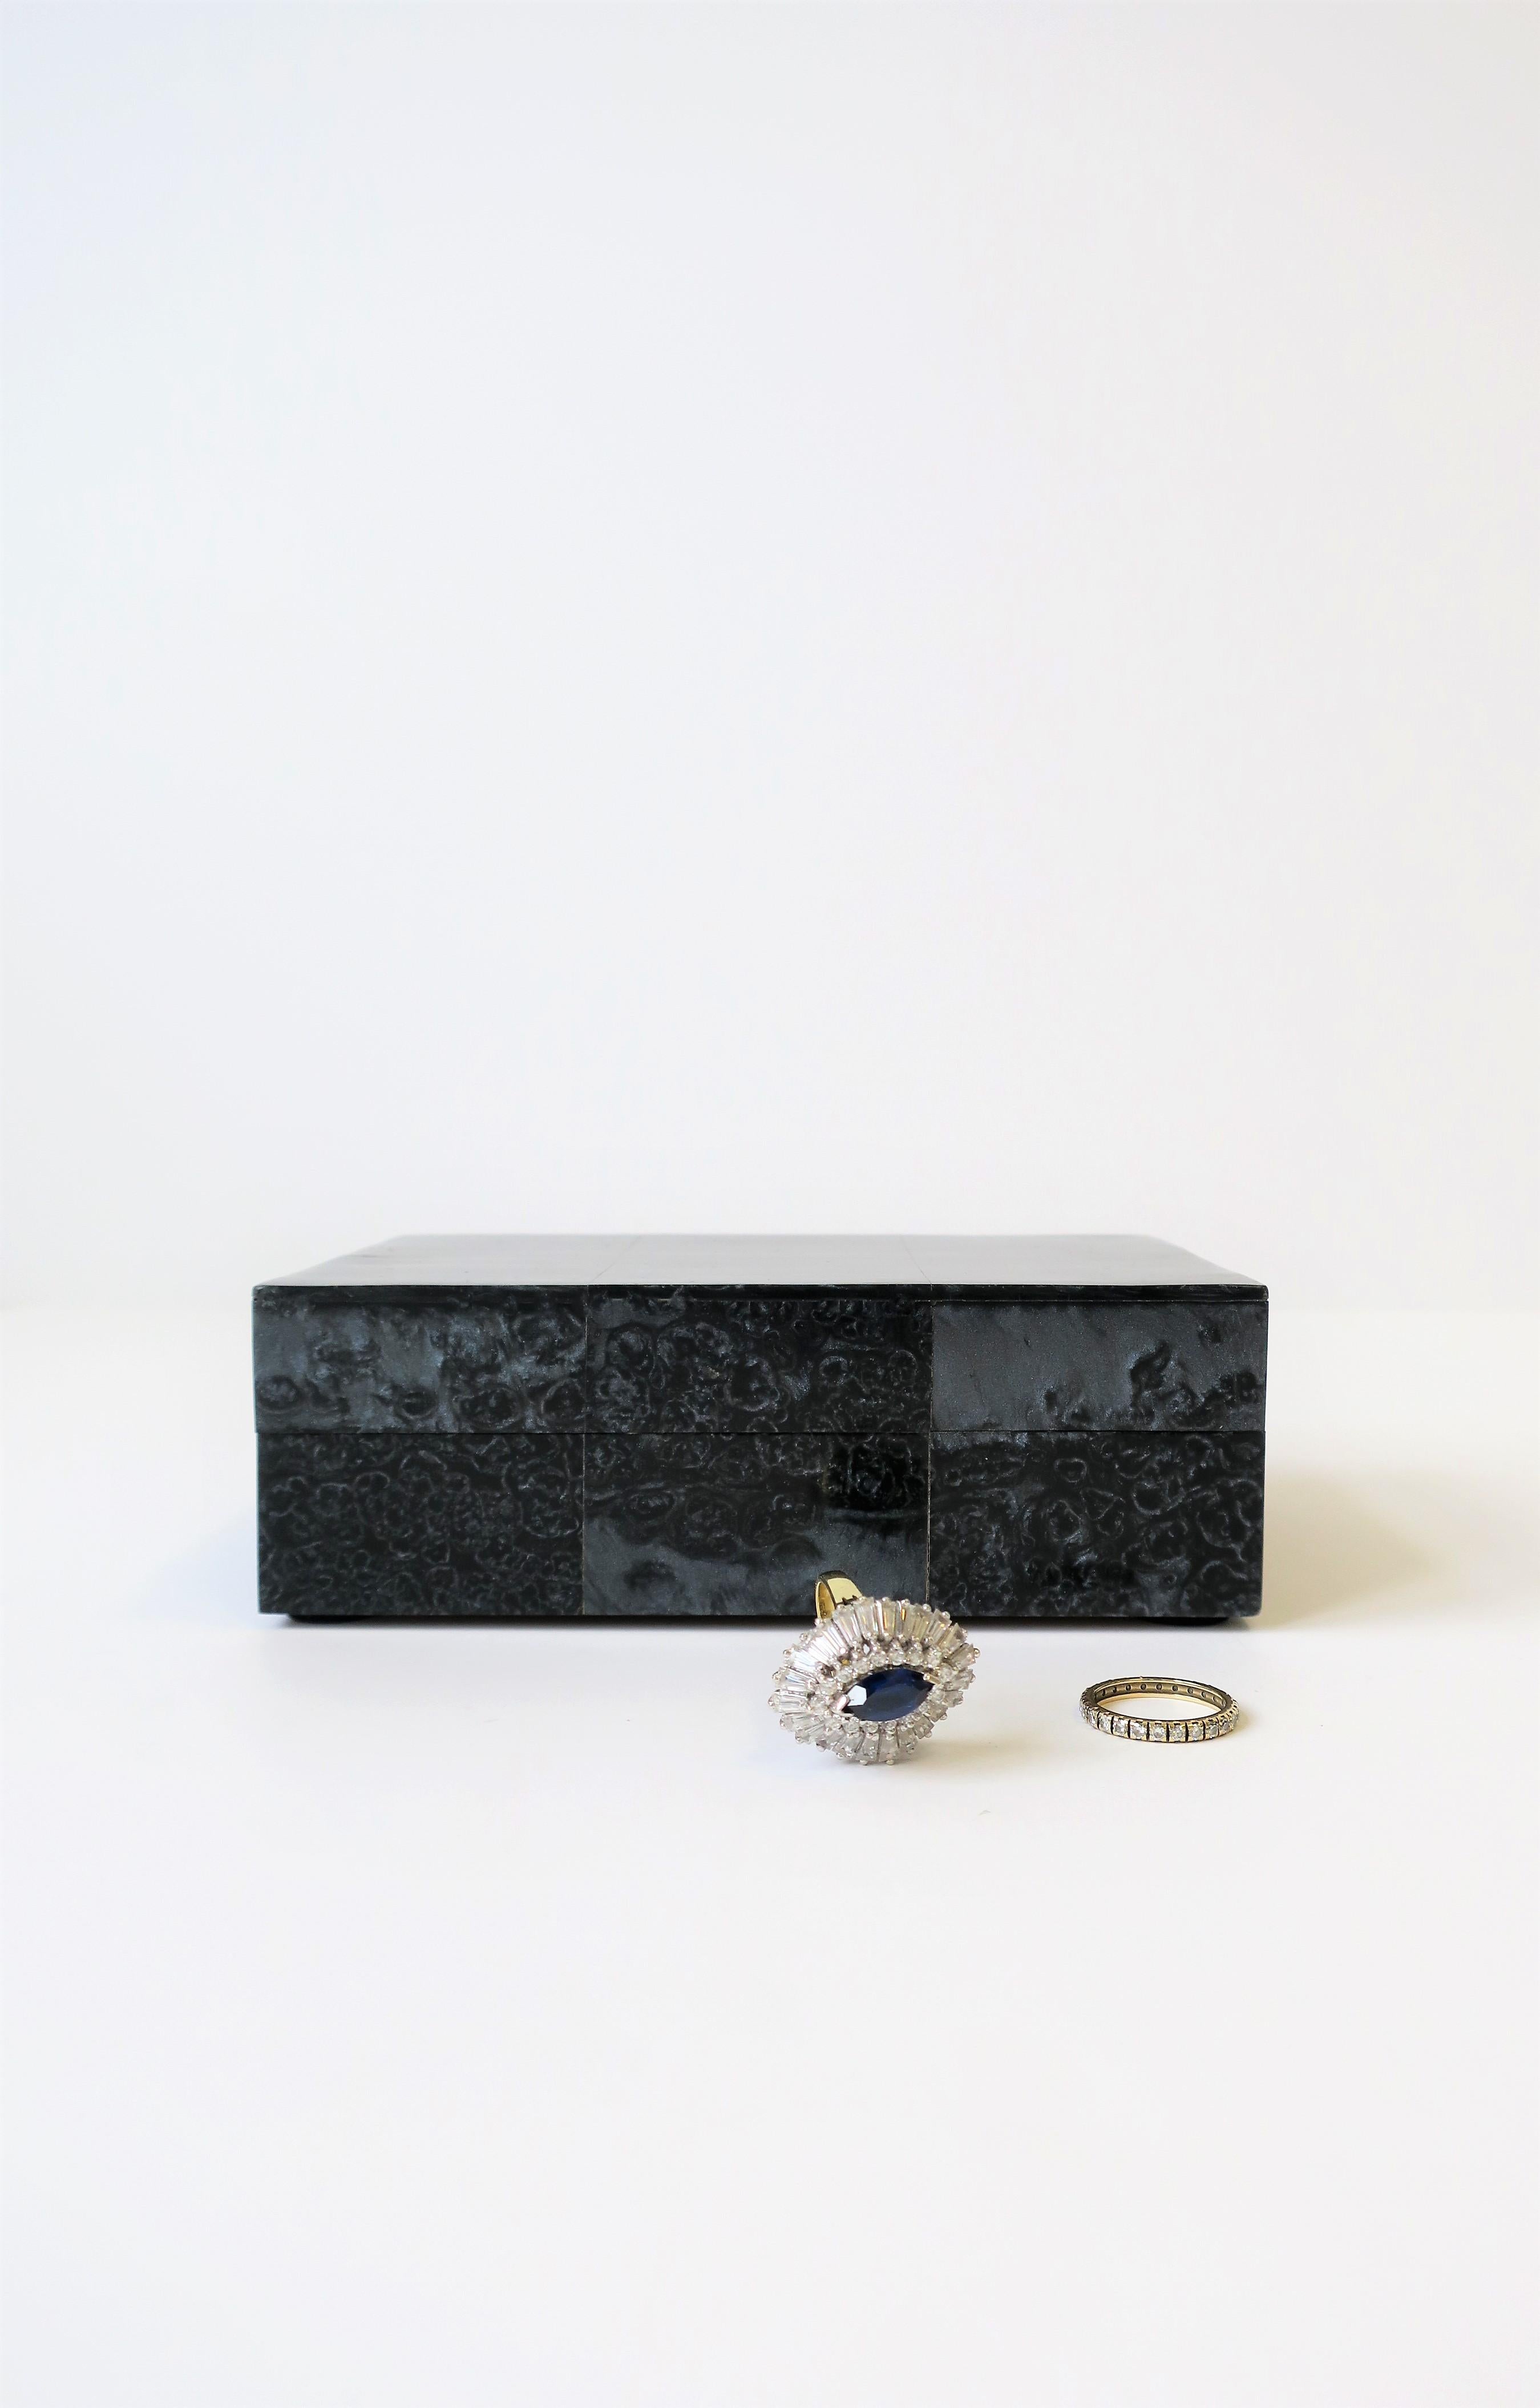 black jewelry box